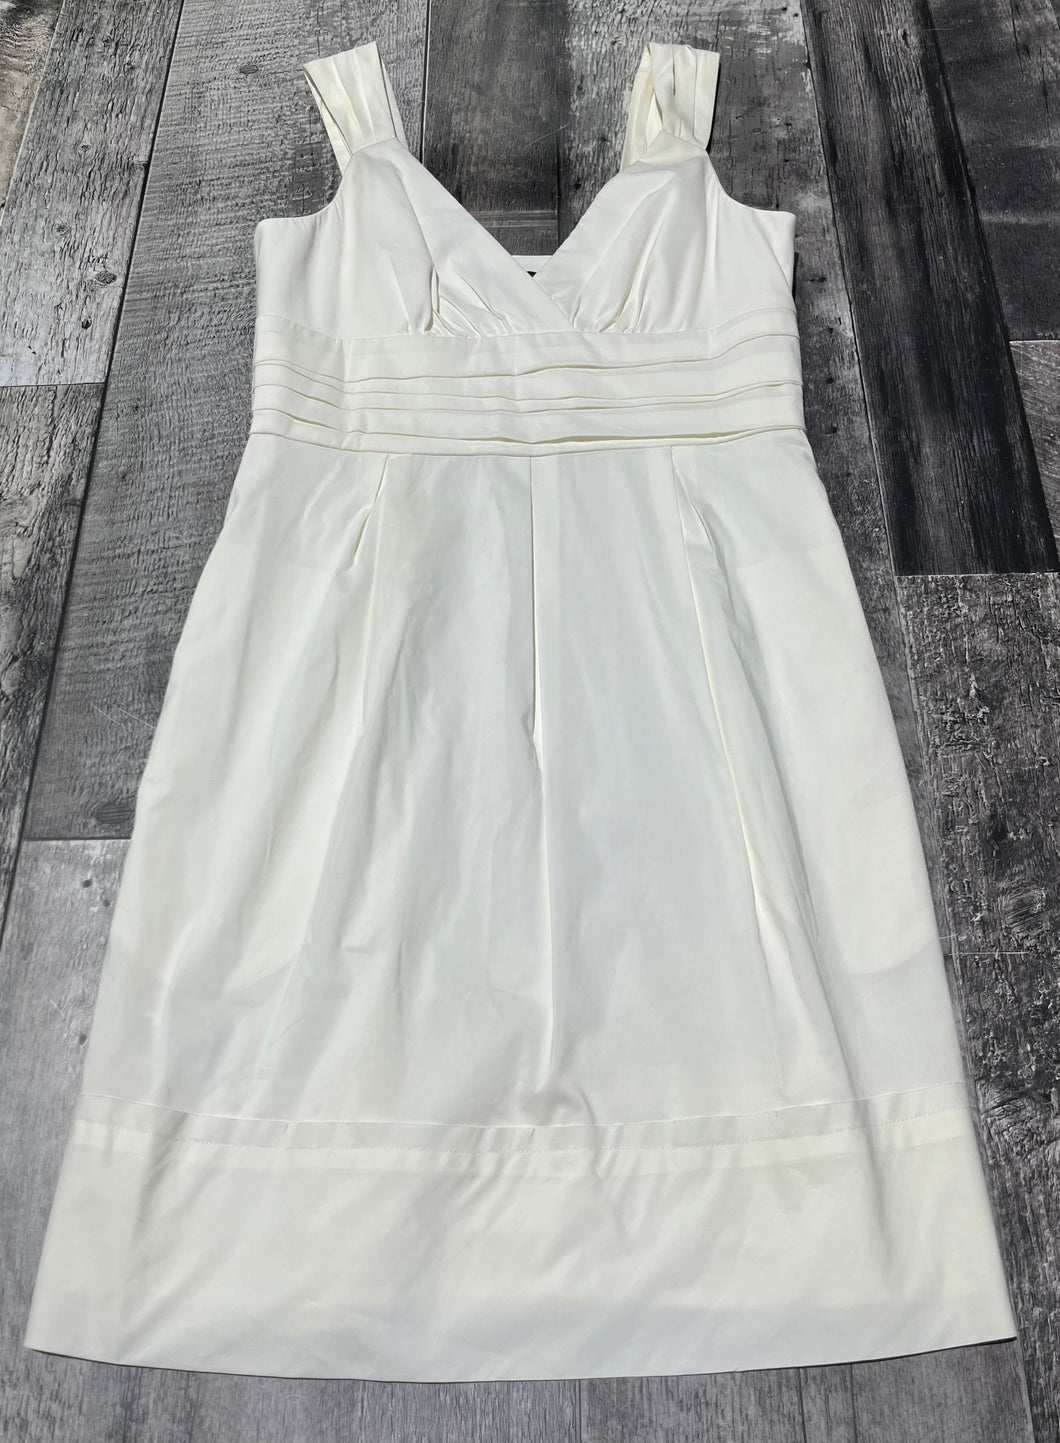 BCBG white dress - Hers size 4